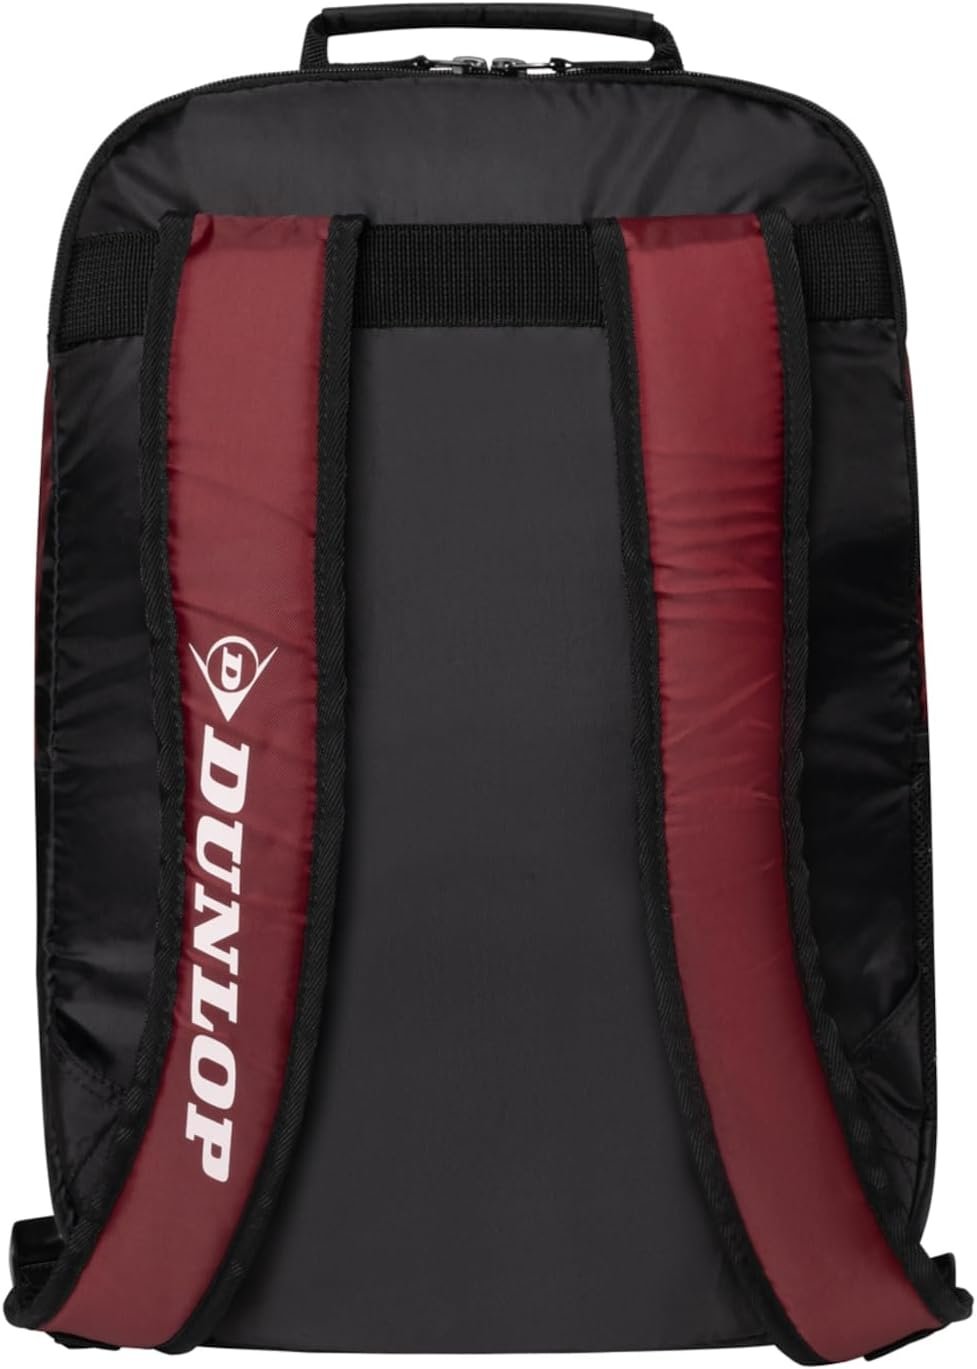 Dunlop 2024 CX Club Backpack, Black/Red